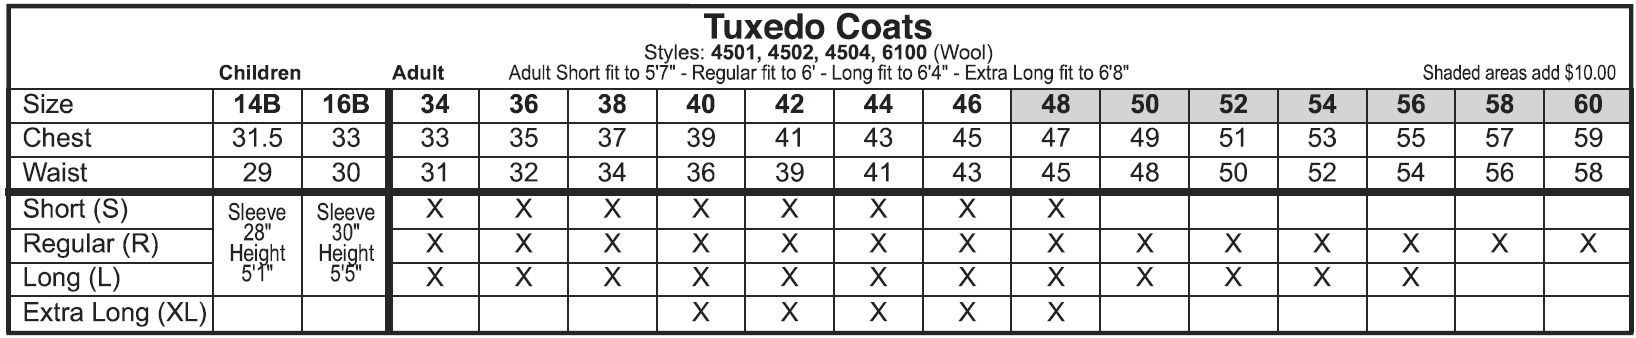 Tuxedo Coats Size Chart